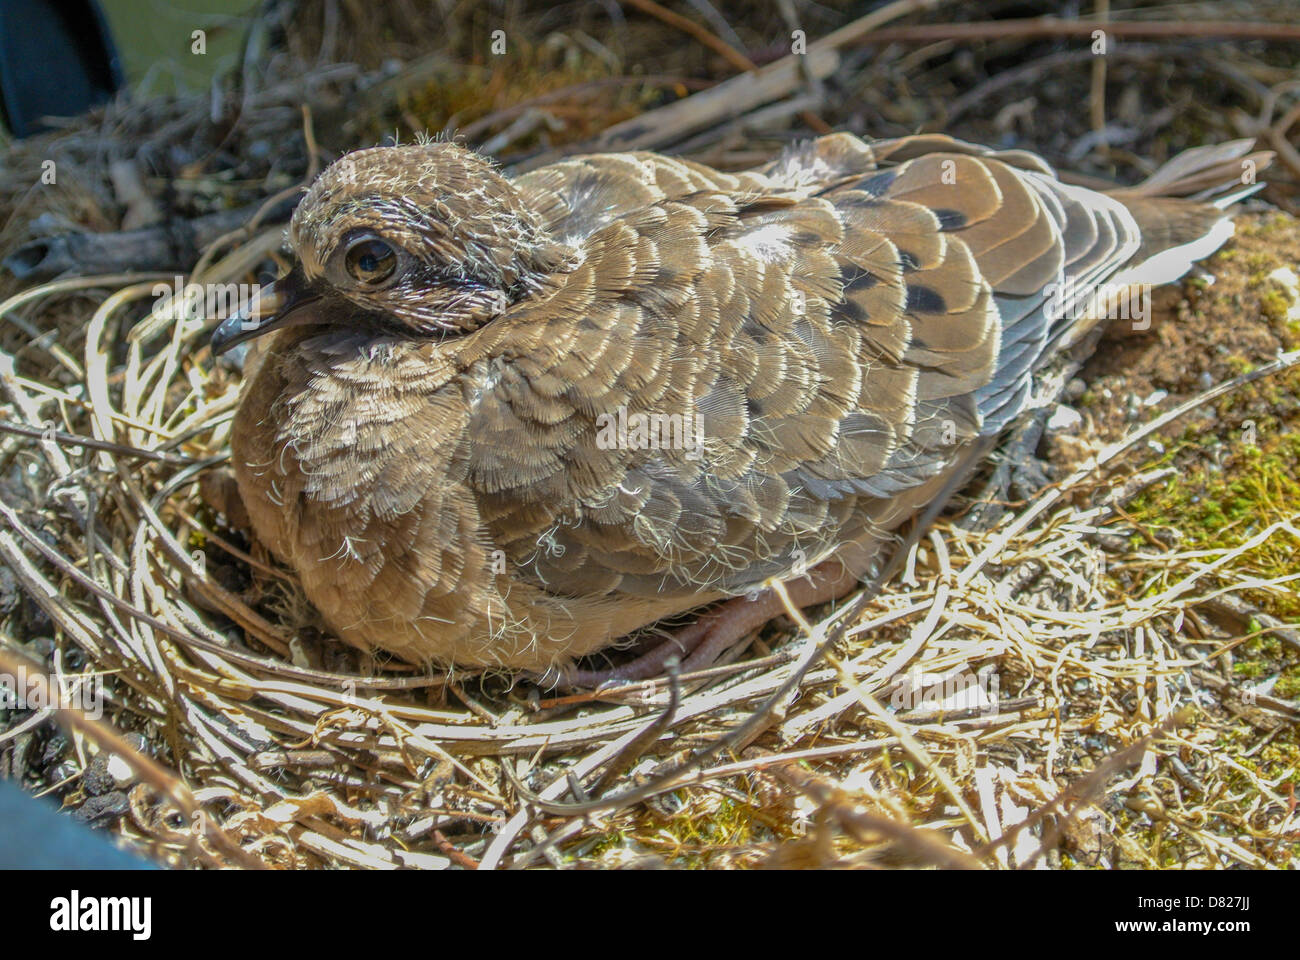 Mourning dove chick in a nest aka turtle dove Zenaida macroura Stock Photo